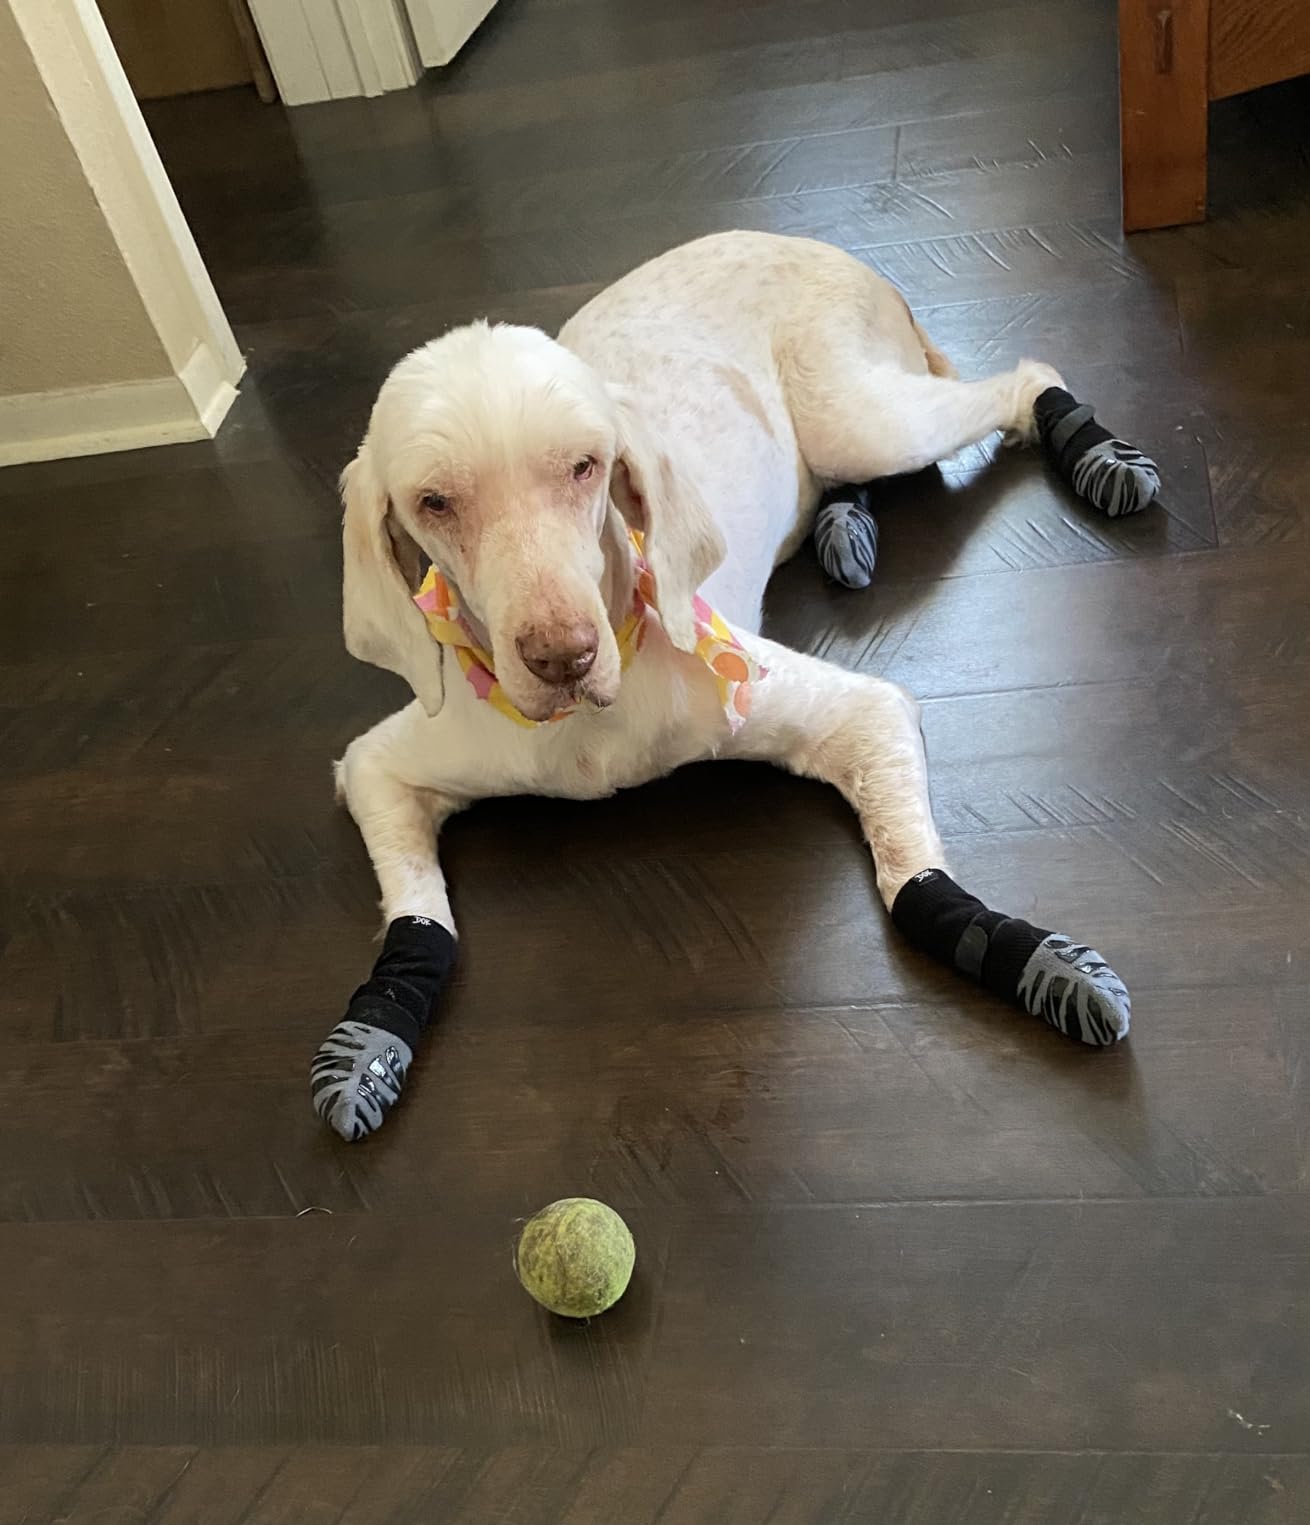 An old dog on hardwood flooring that is wearing TigerToes dog grip socks